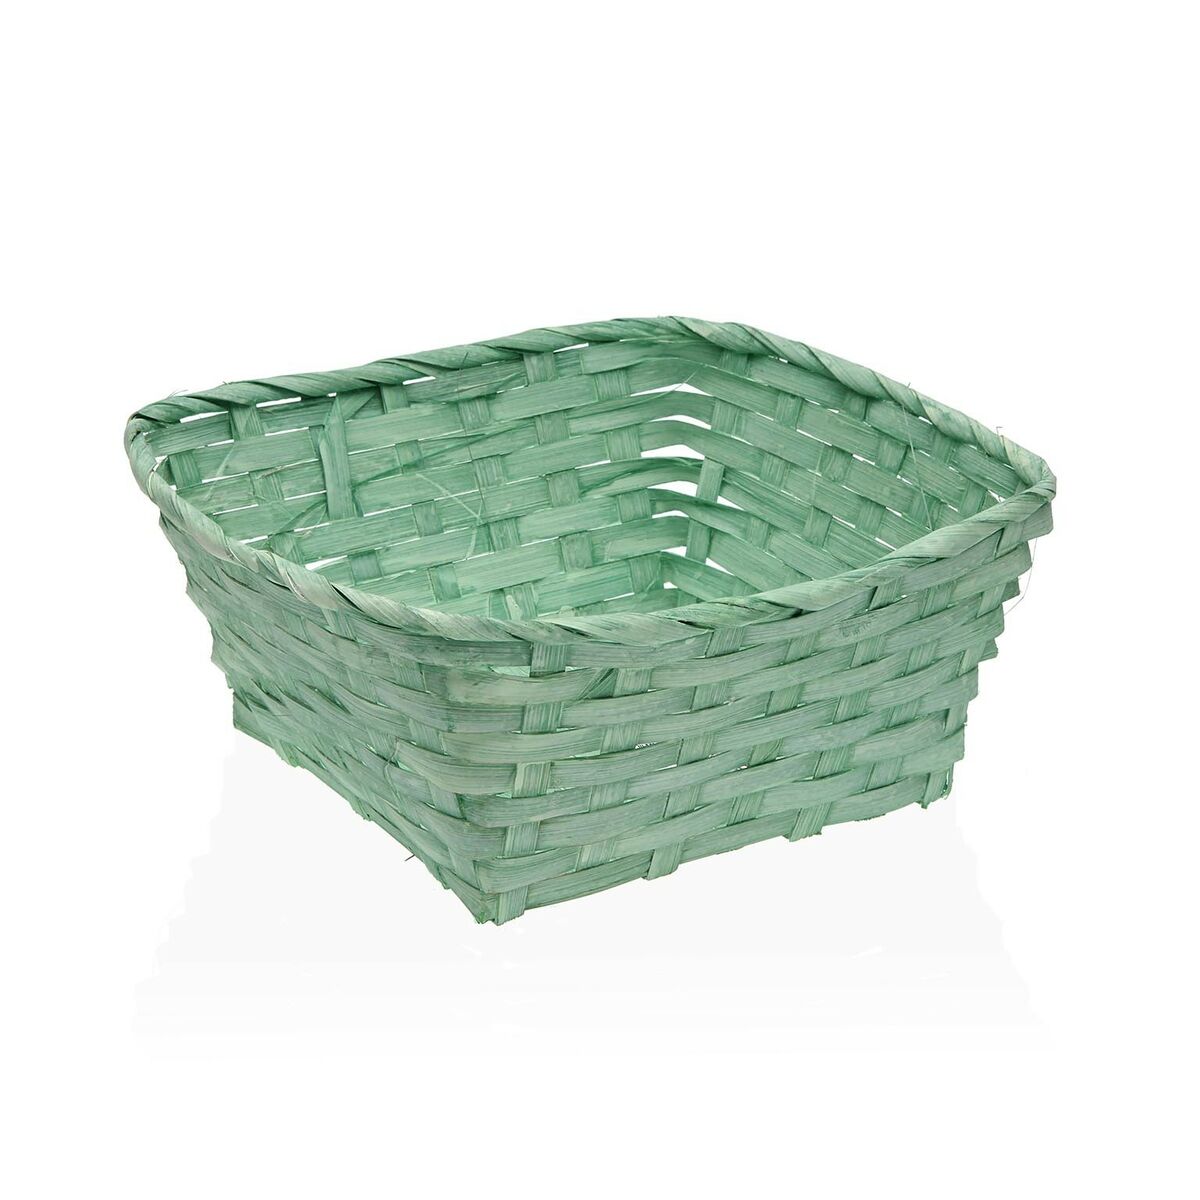 Basket Versa Marine algae Squared 20 x 10 x 20 cm Green